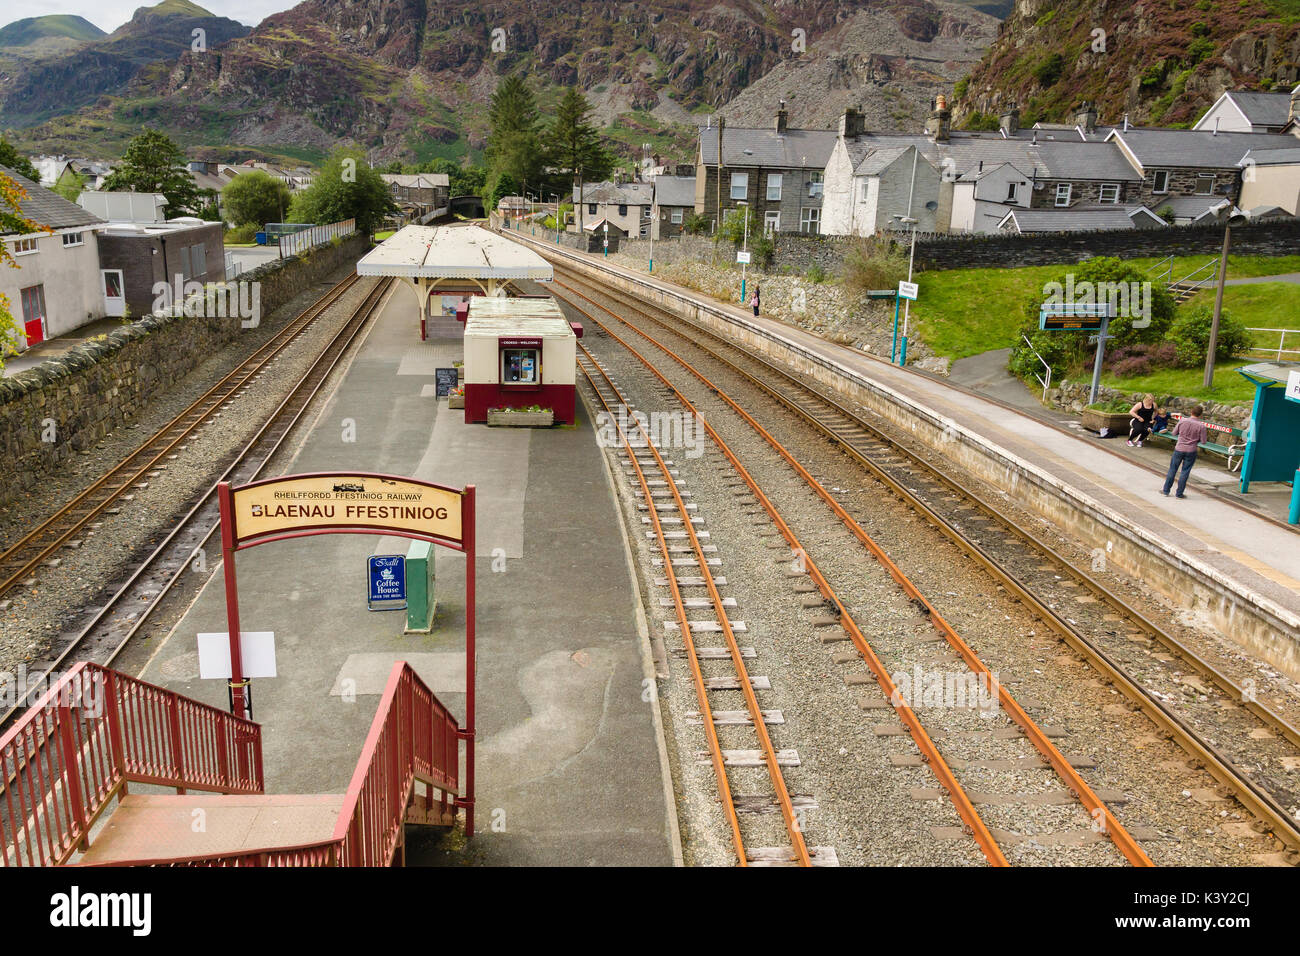 The railway station in the Welsh town of Blaenau Ffestiniog Stock Photo